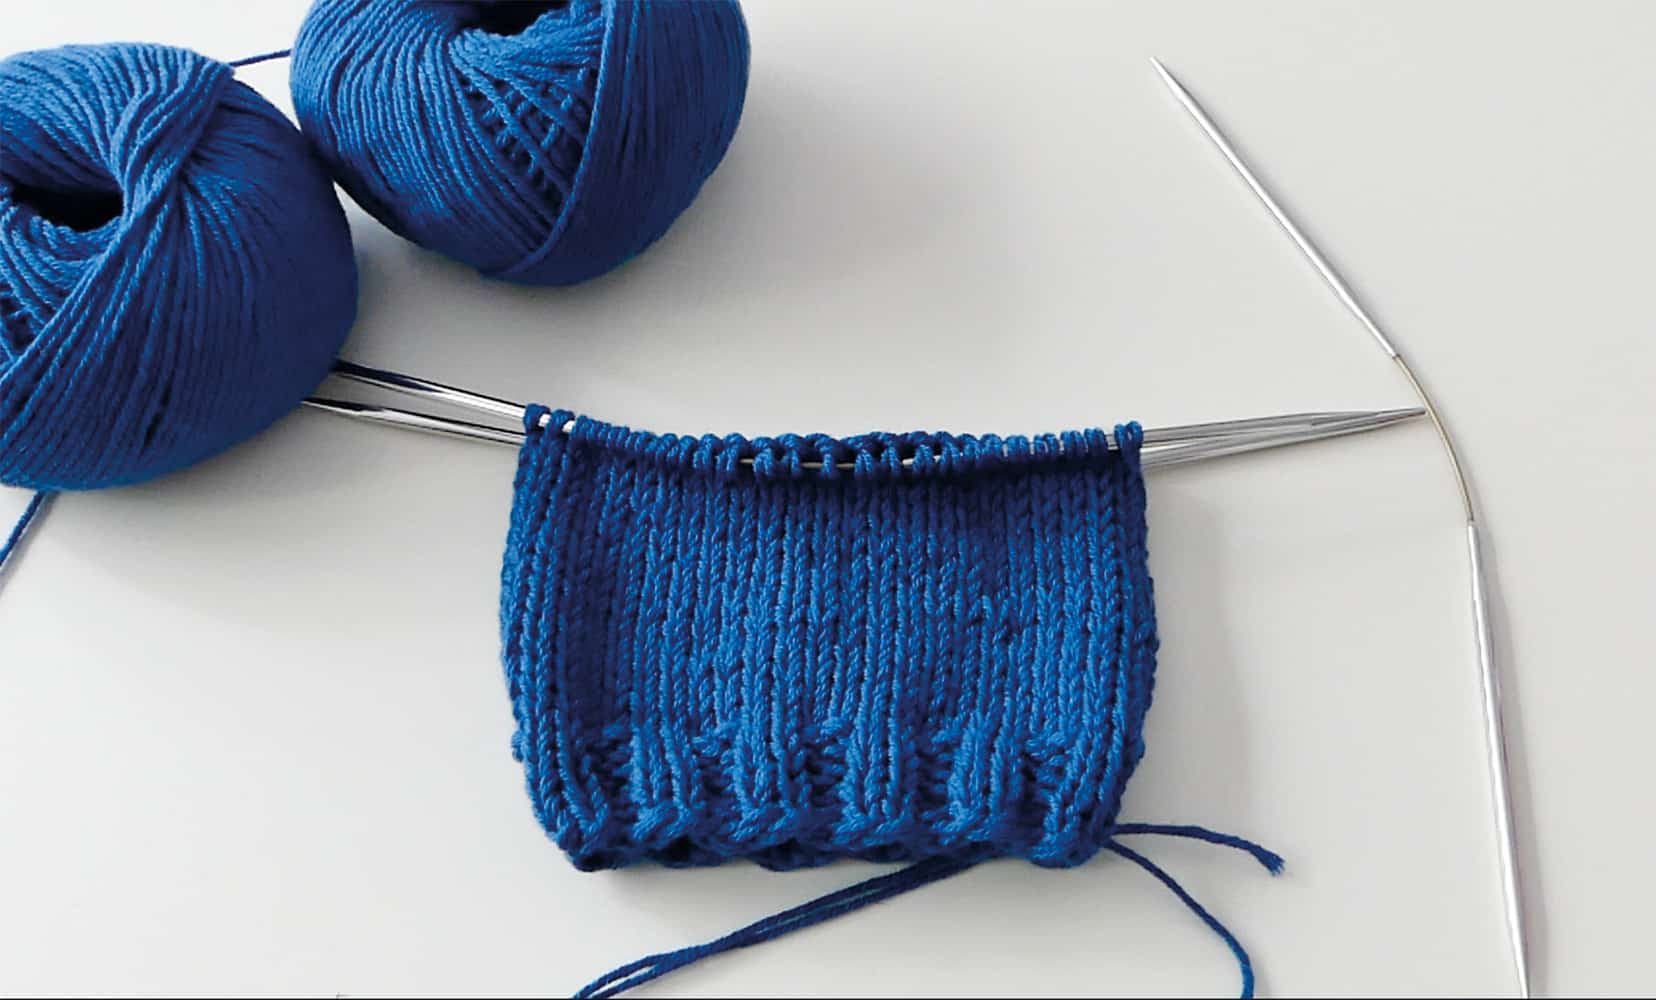 addiCraSyTrioLONG 06 4c Beanie Hat knitting,Beanie knitting tutorial,Beanie knitting addiCraSyTrio,Trio Beanie knitting,Beanie knitting for beginners